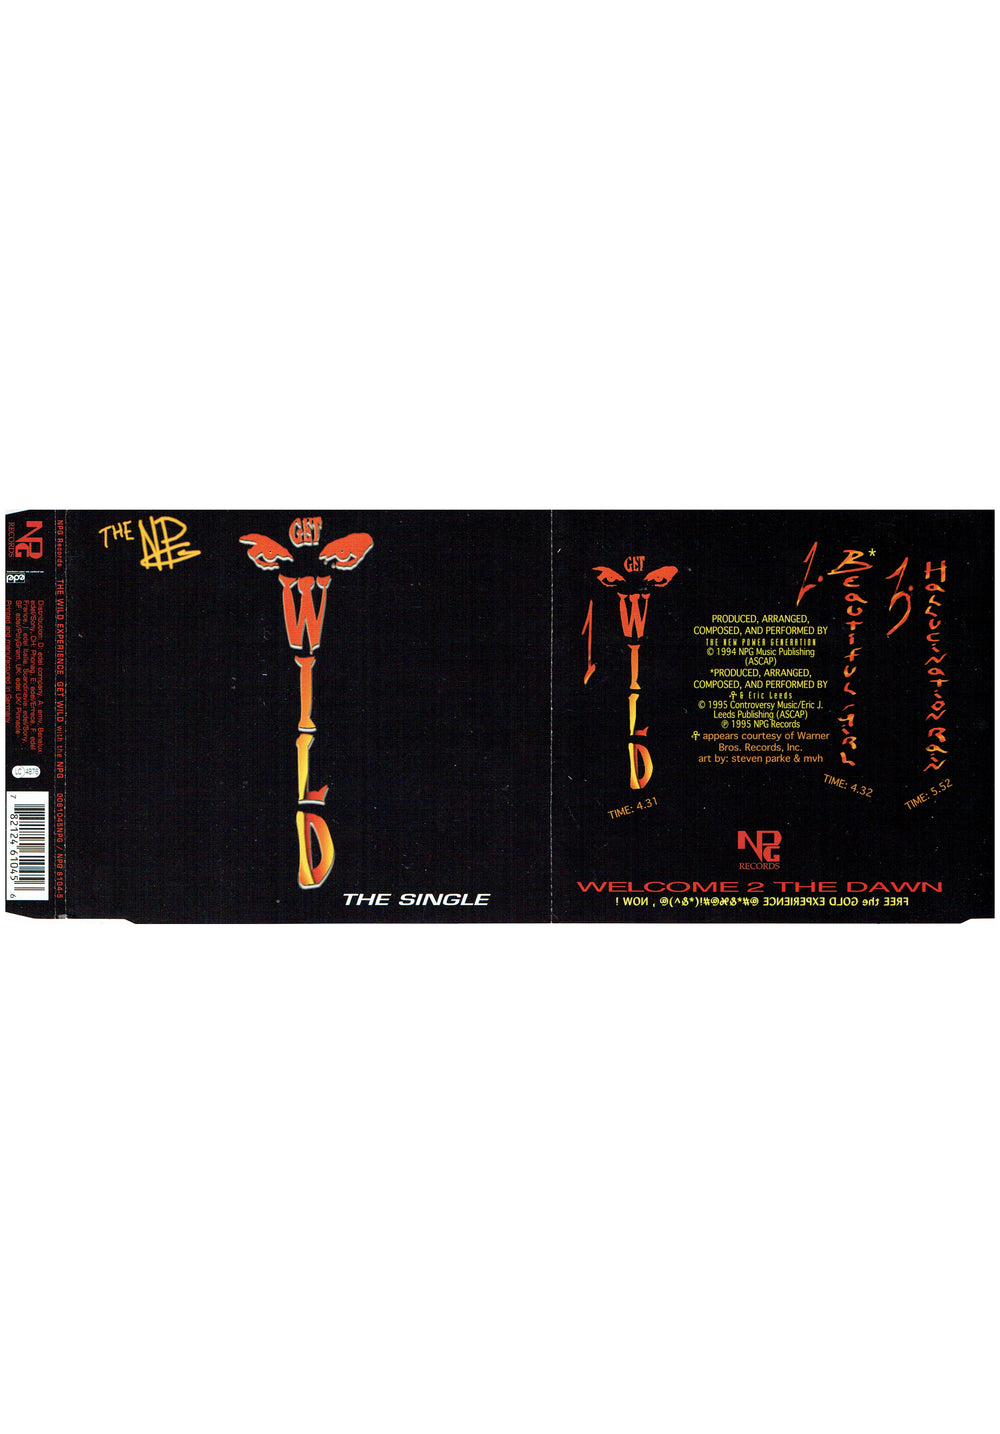 Prince – The NPG – Get Wild CD Single Europe Preloved: 1995*